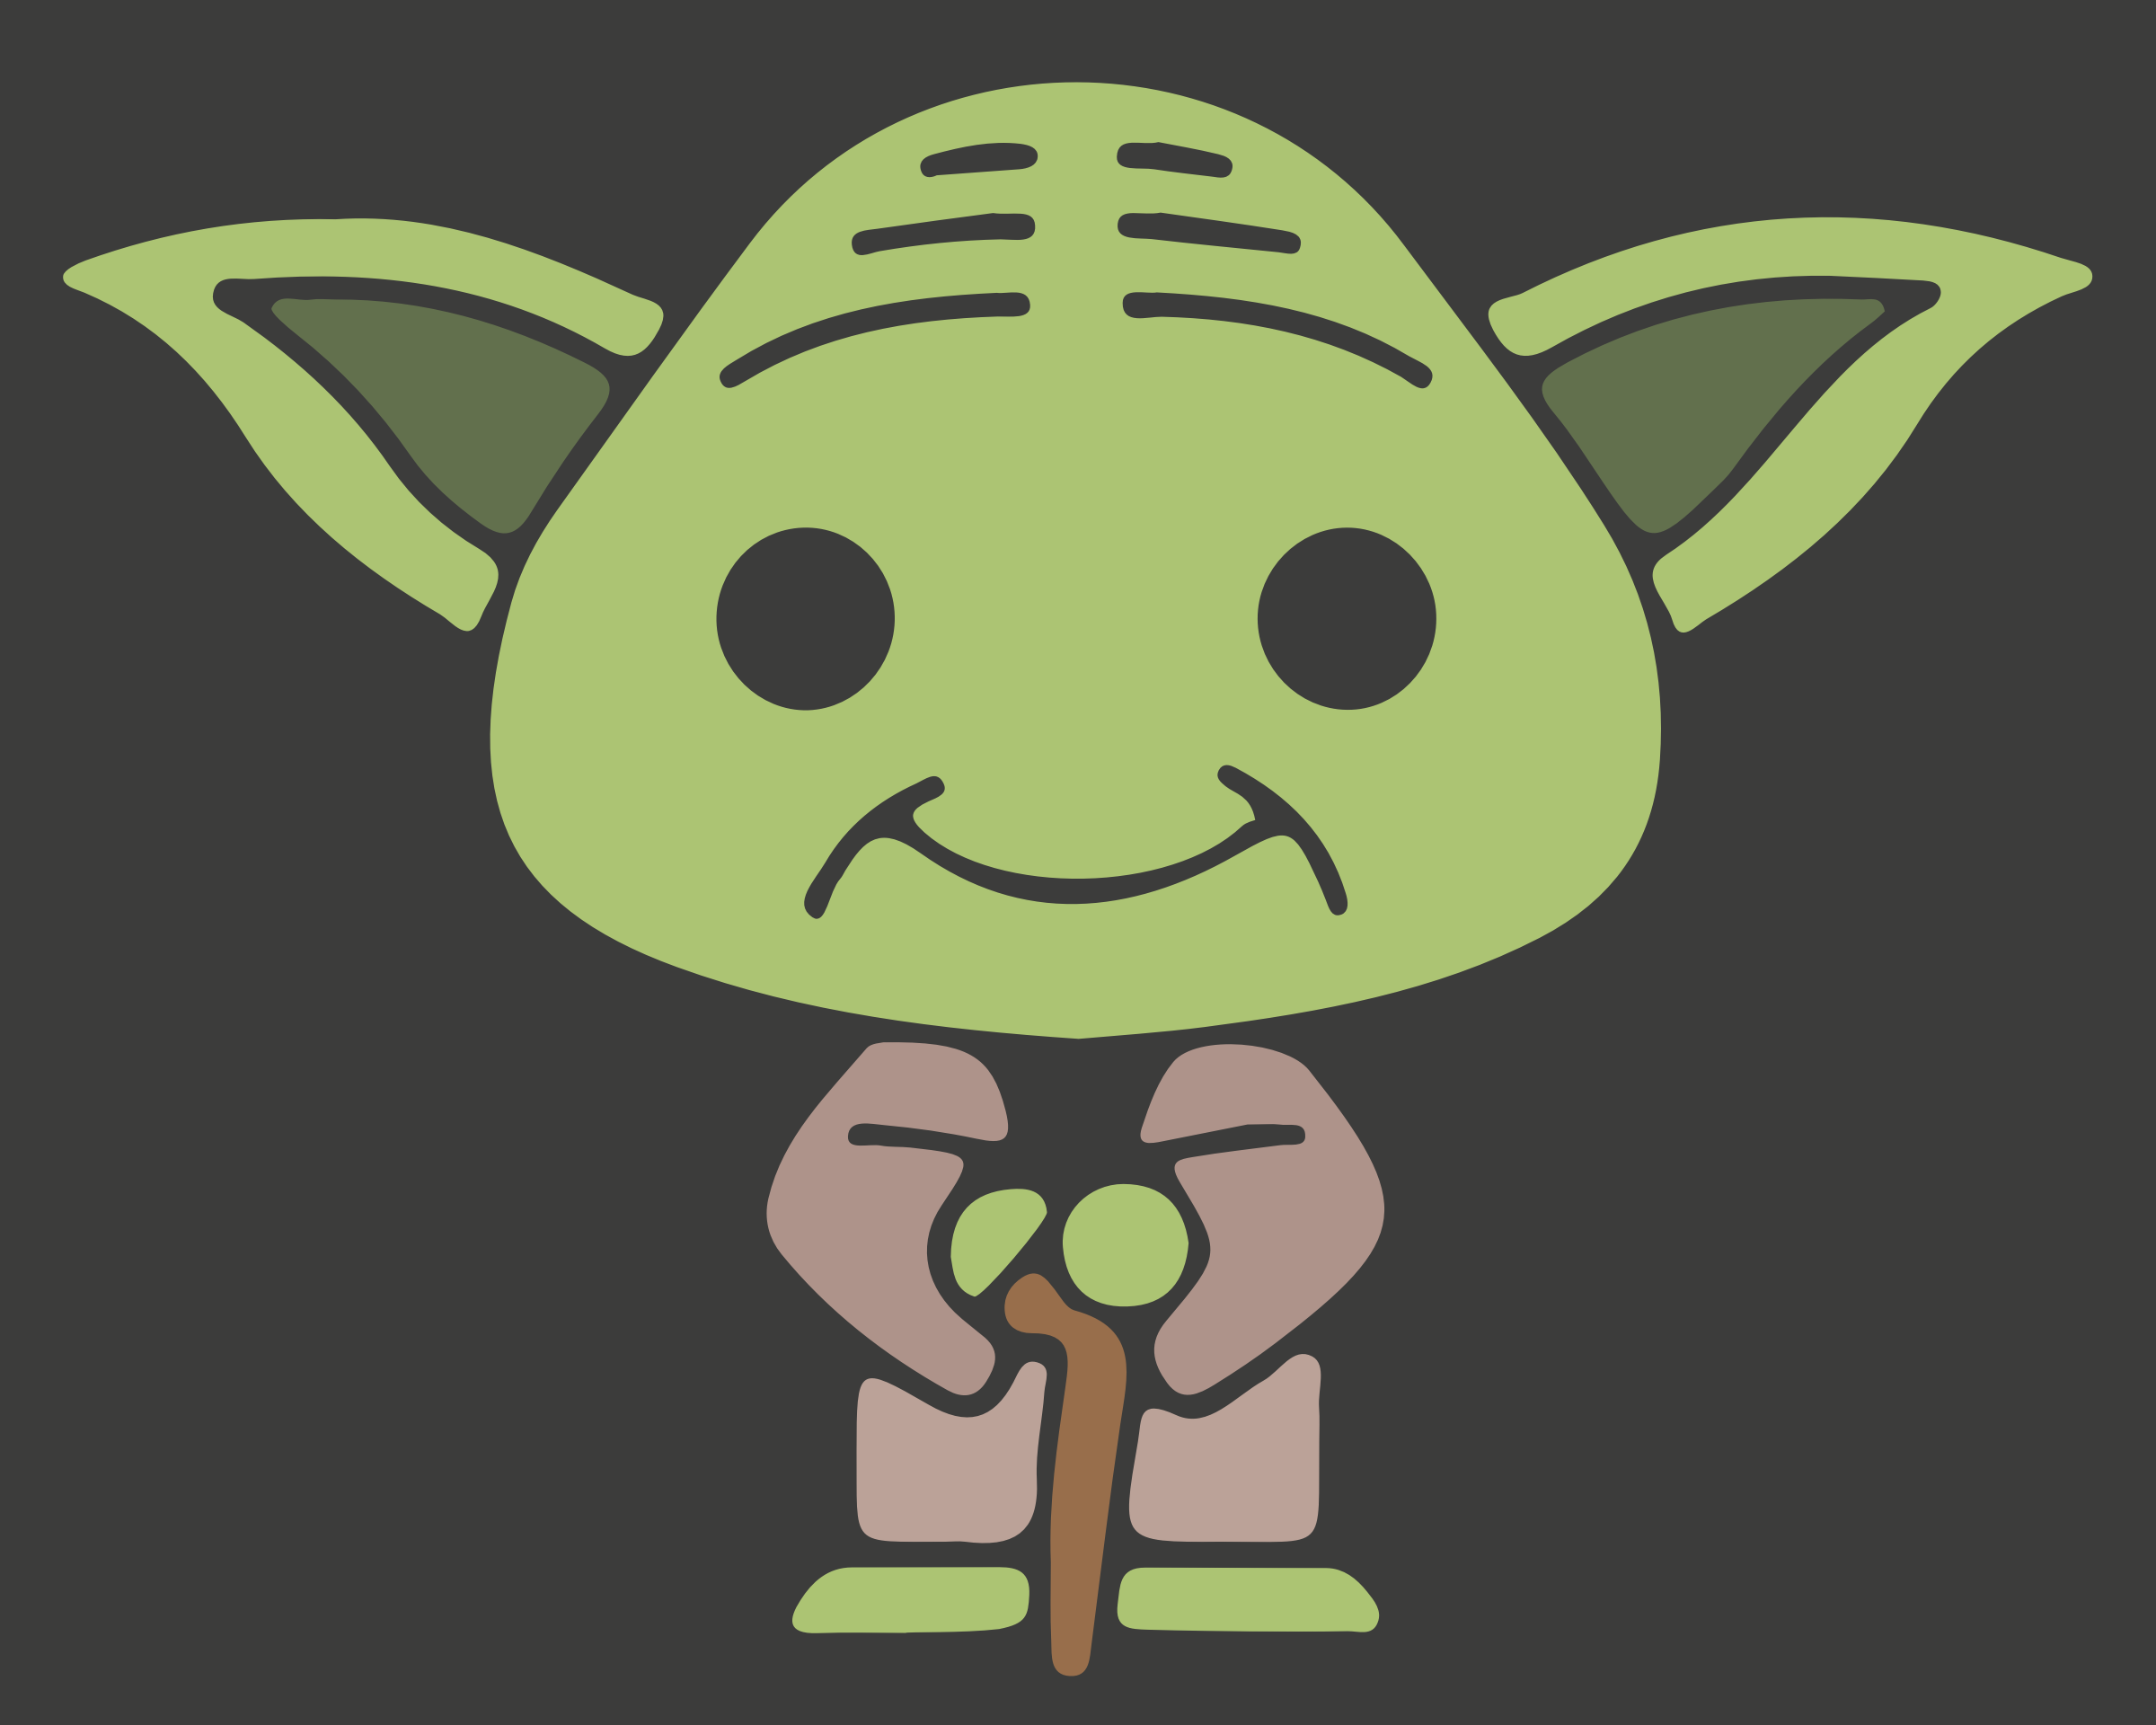 Free Yoda Cliparts, Download Free Yoda Cliparts png images, Free